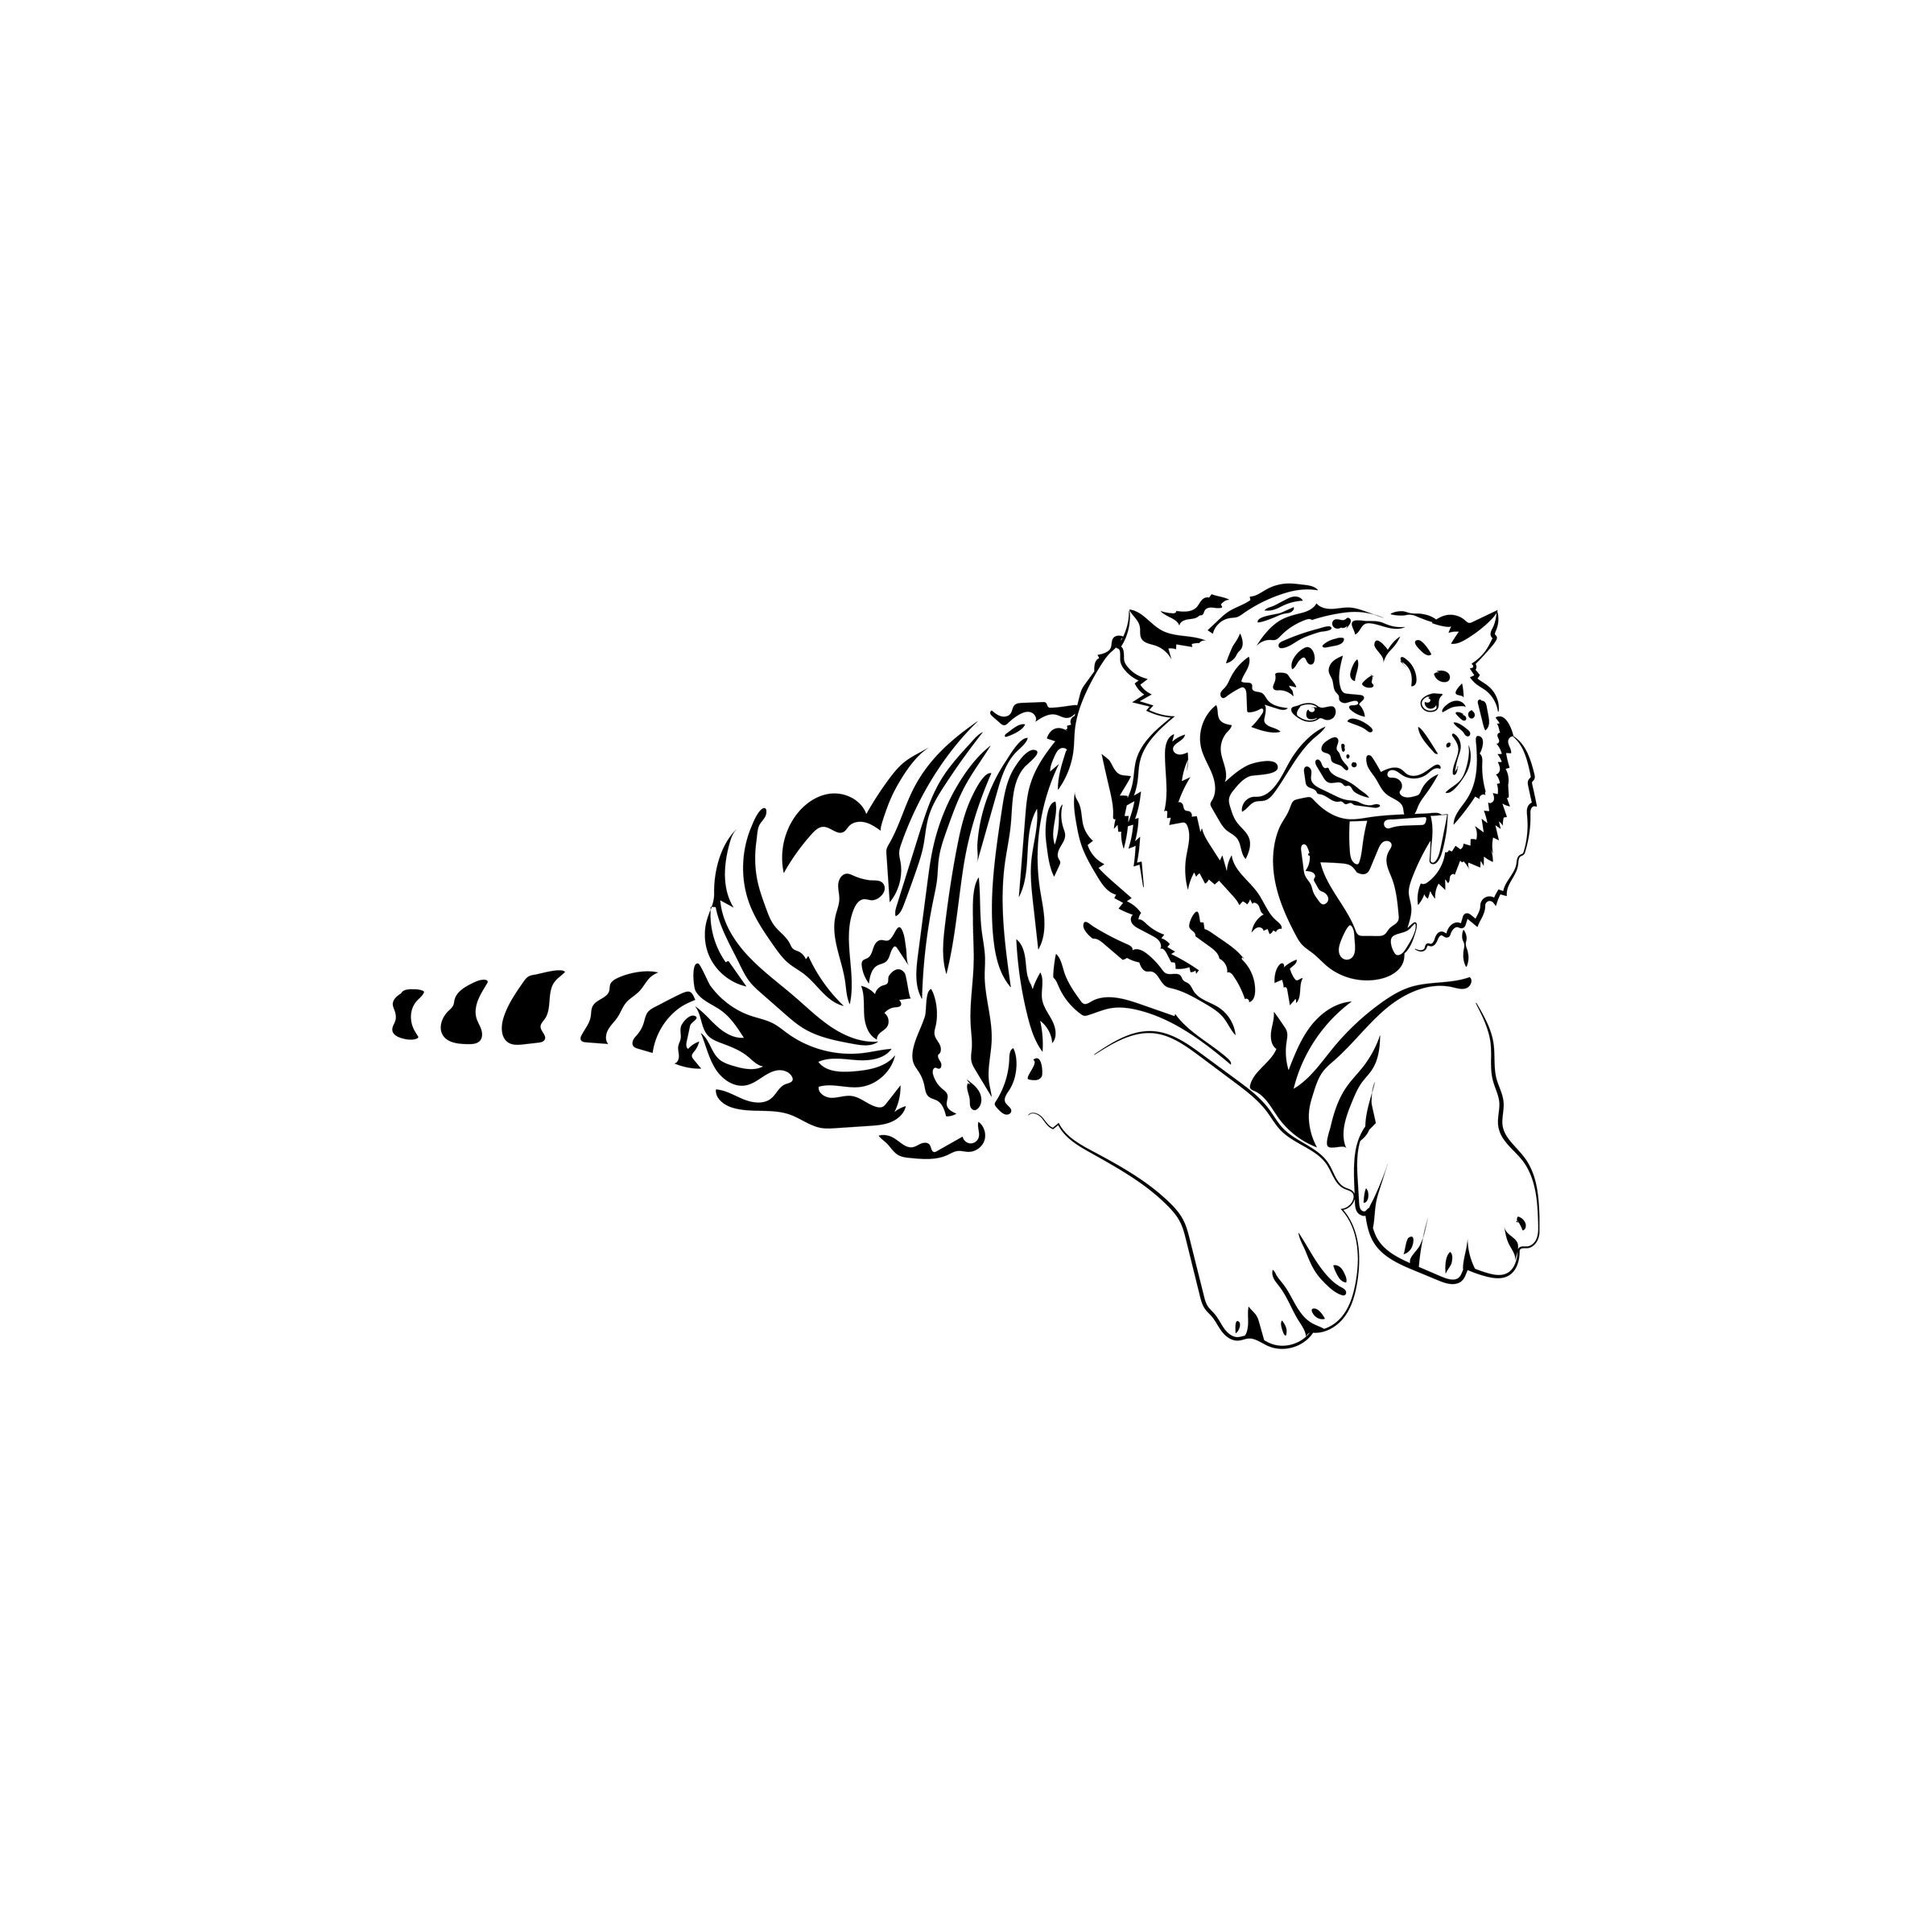 Tribal Tiger Tattoo by BathedInSin on DeviantArt